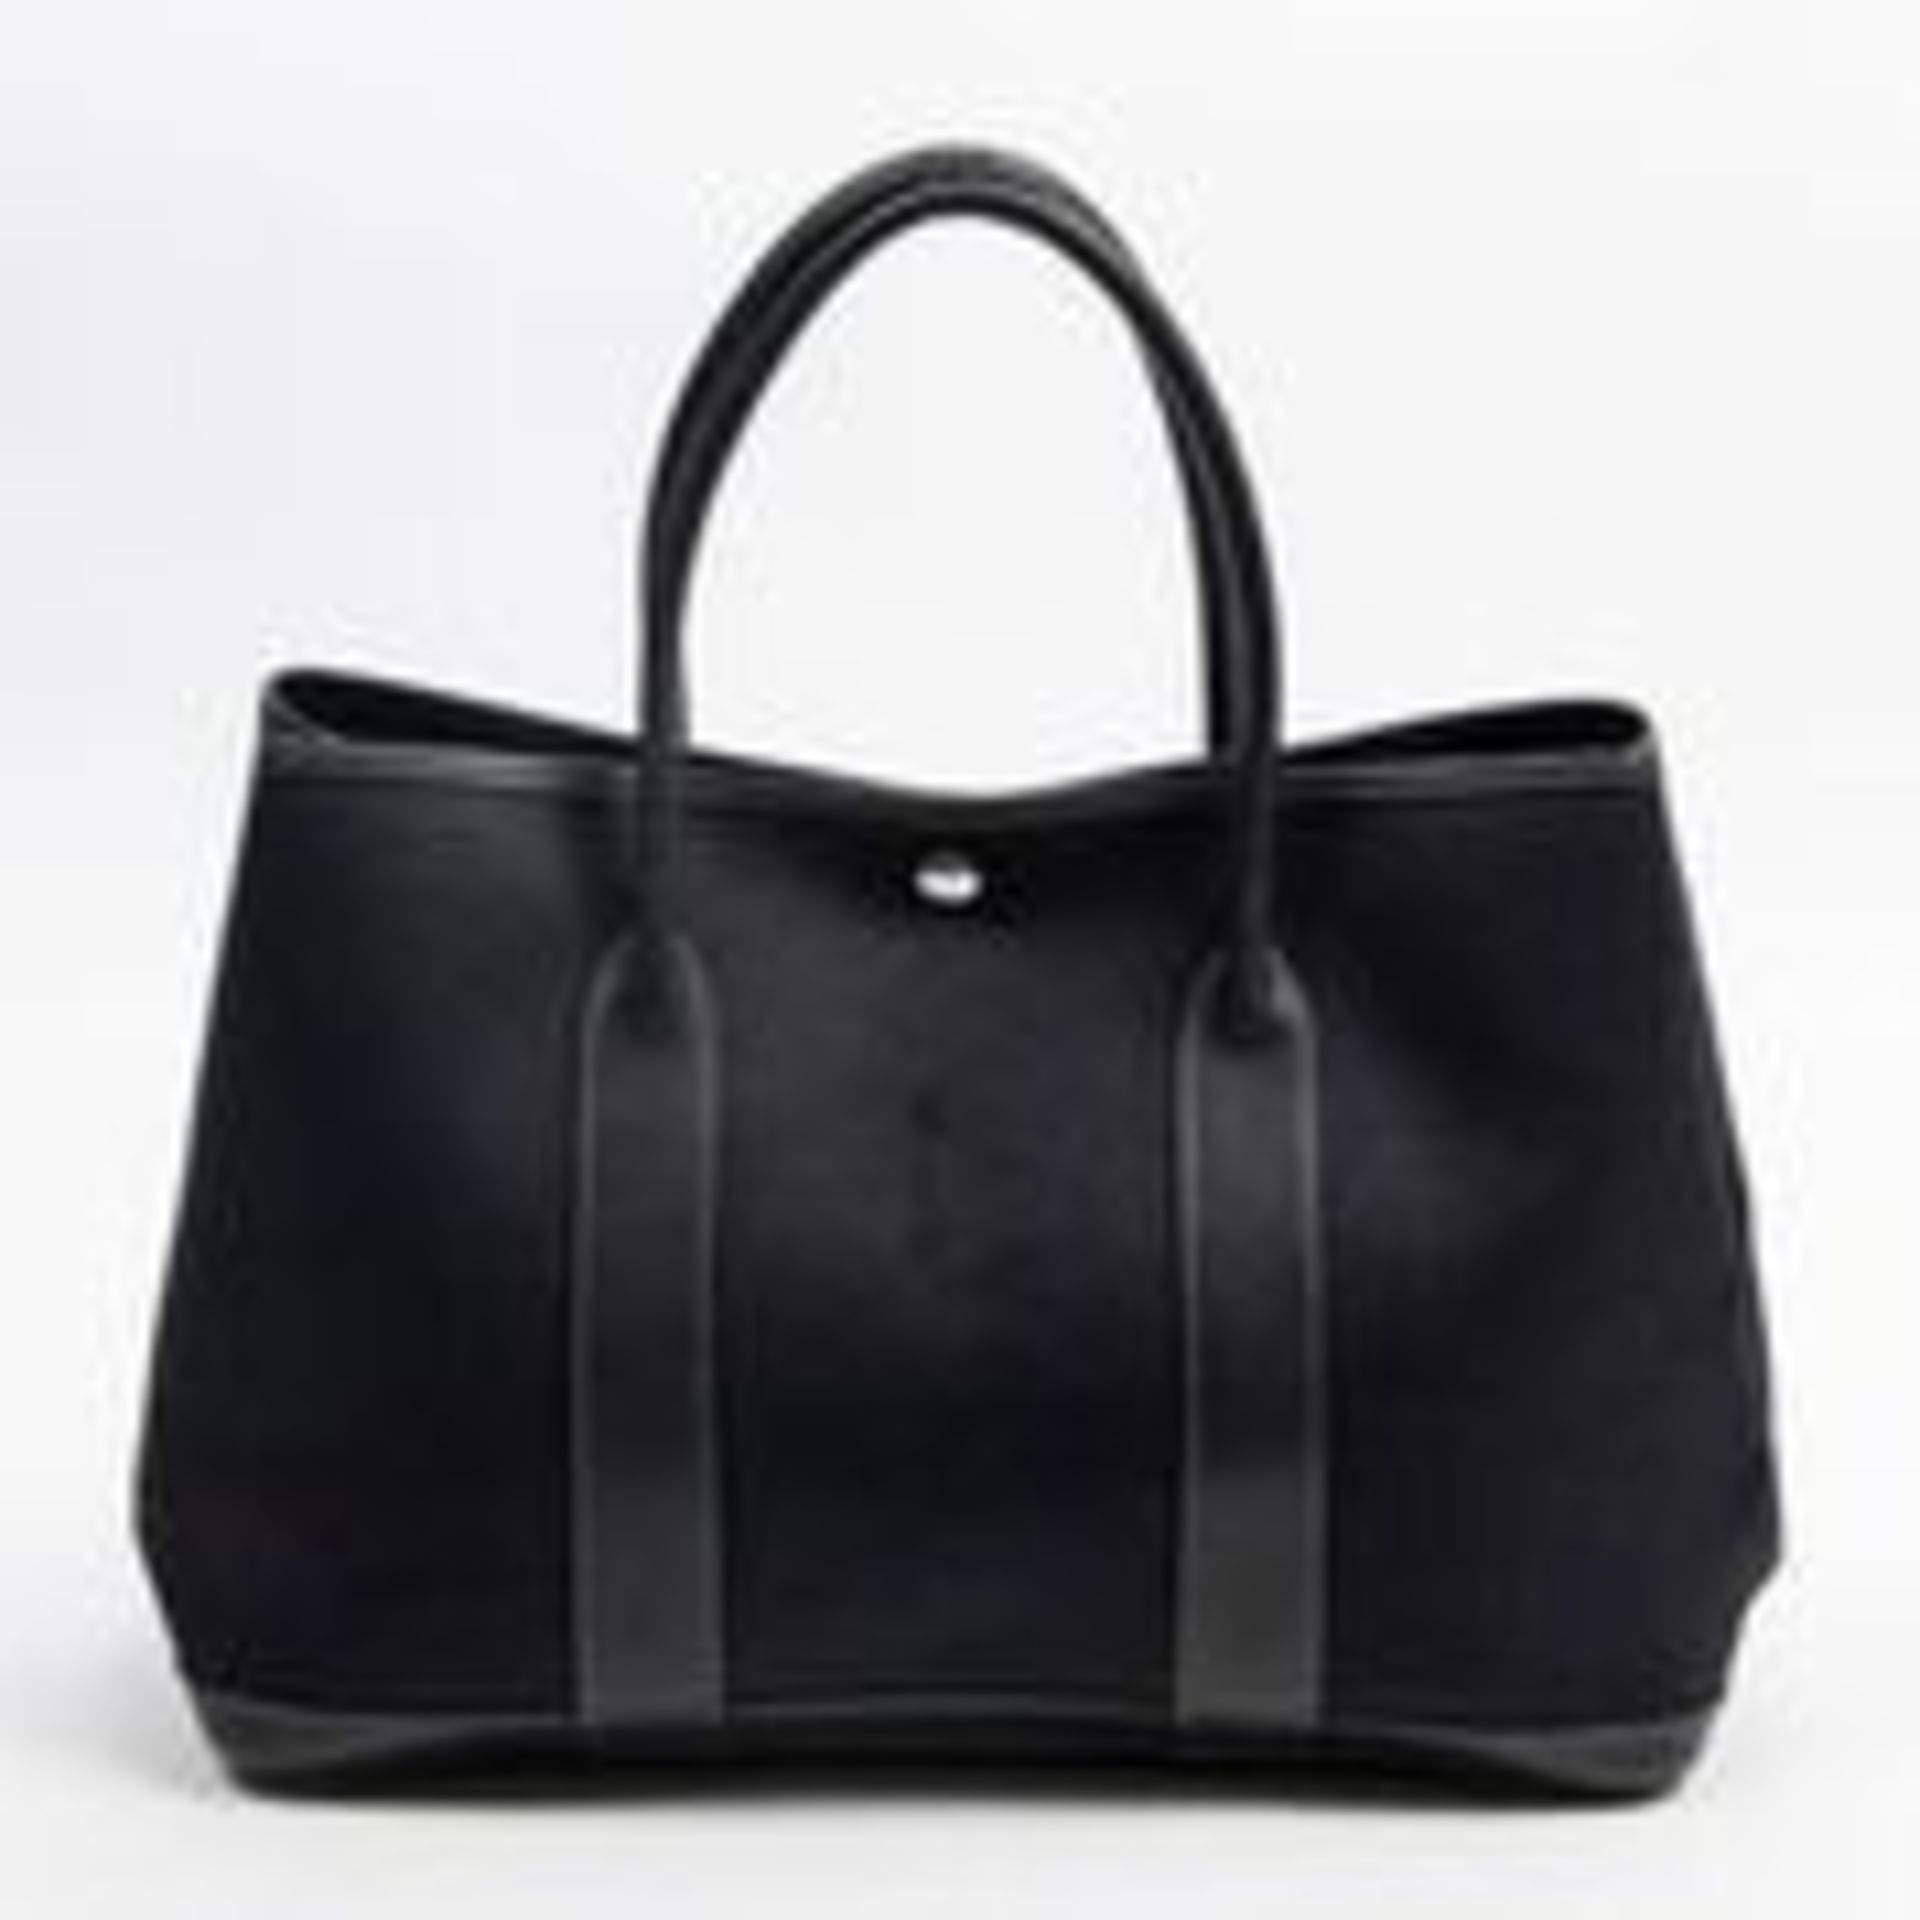 RRP £3,100 Hermès Garden Party Shoulder Bag Black - AAR4406 - Grade A - Please Contact Us Directly